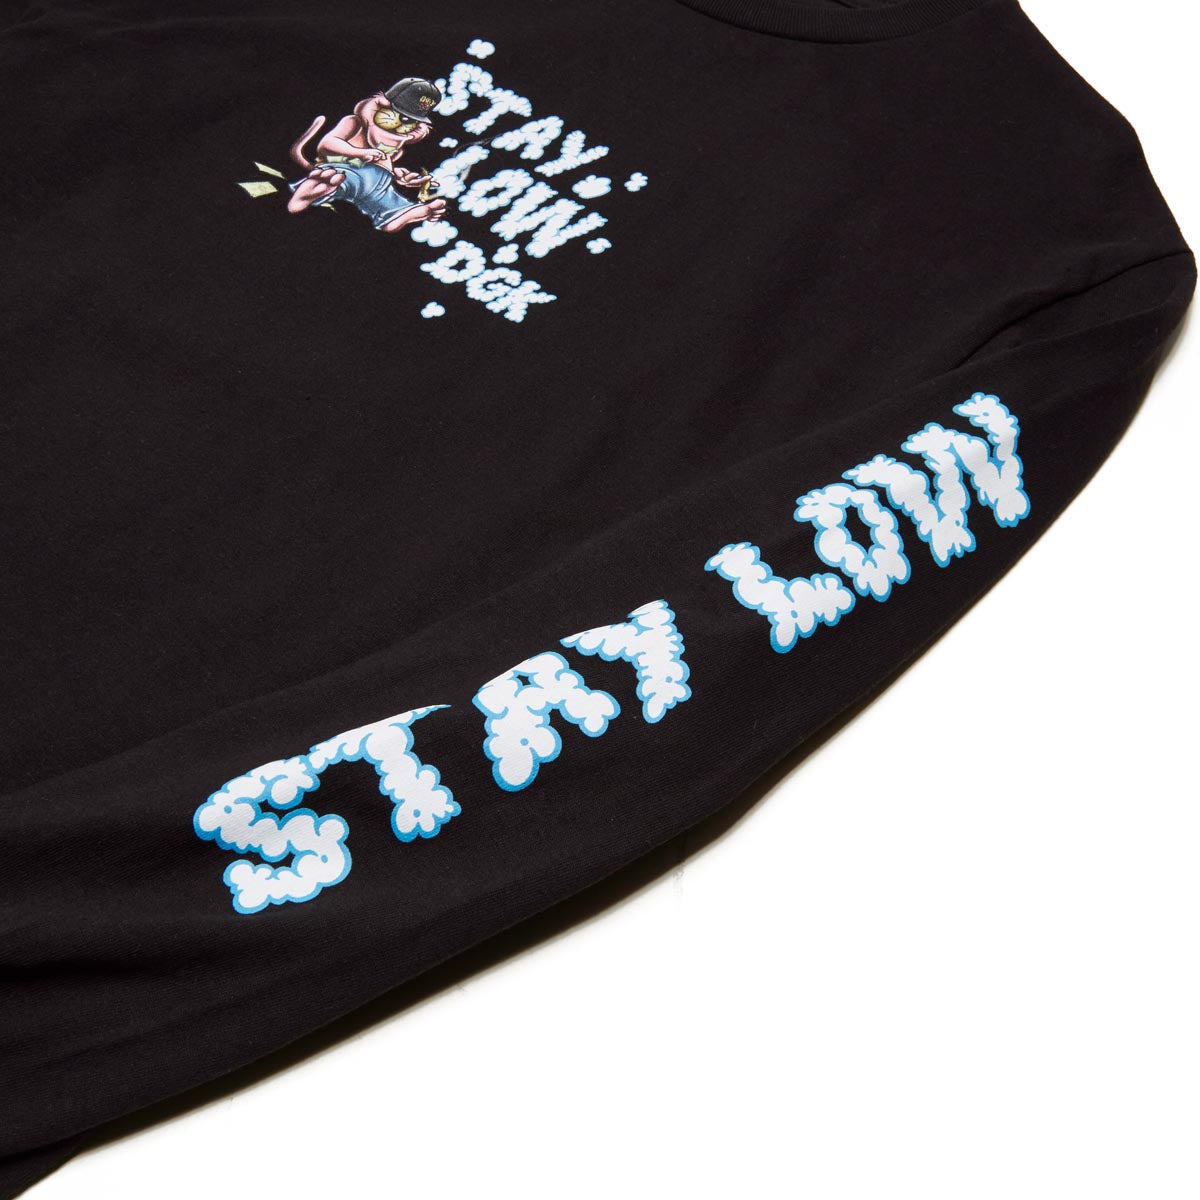 DGK Stay Low Long Sleeve T-Shirt - Black image 3